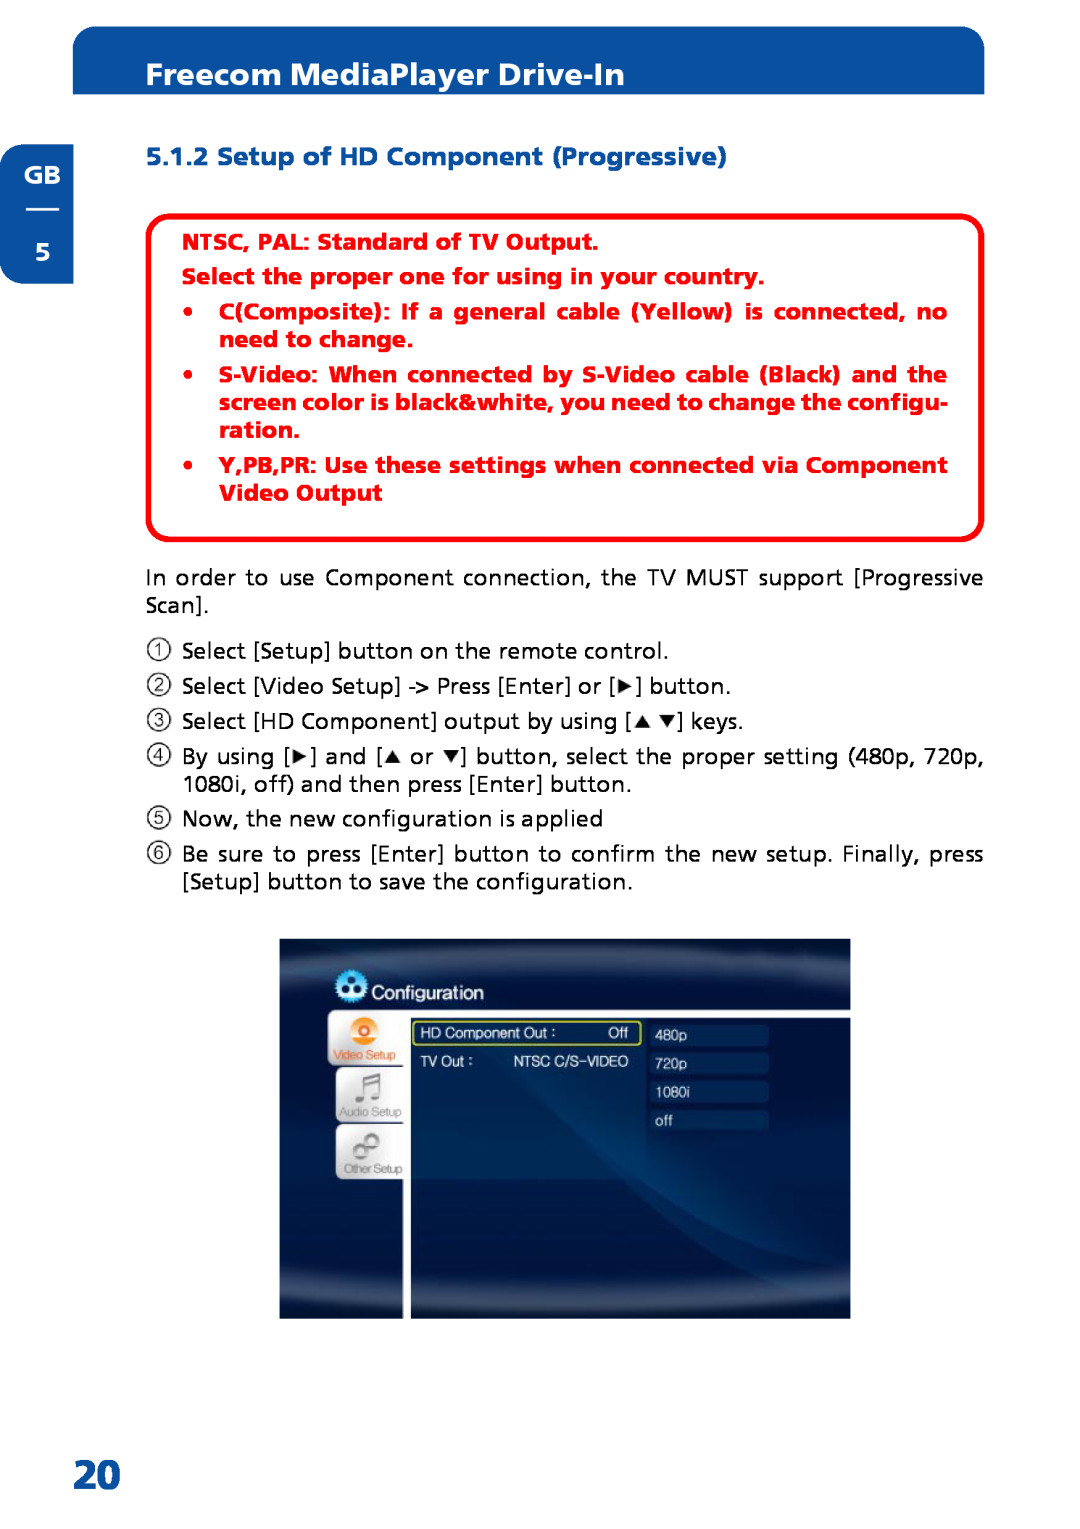 Freecom Technologies Multimedia Player manual Setup of HD Component Progressive, Freecom MediaPlayer Drive-In 